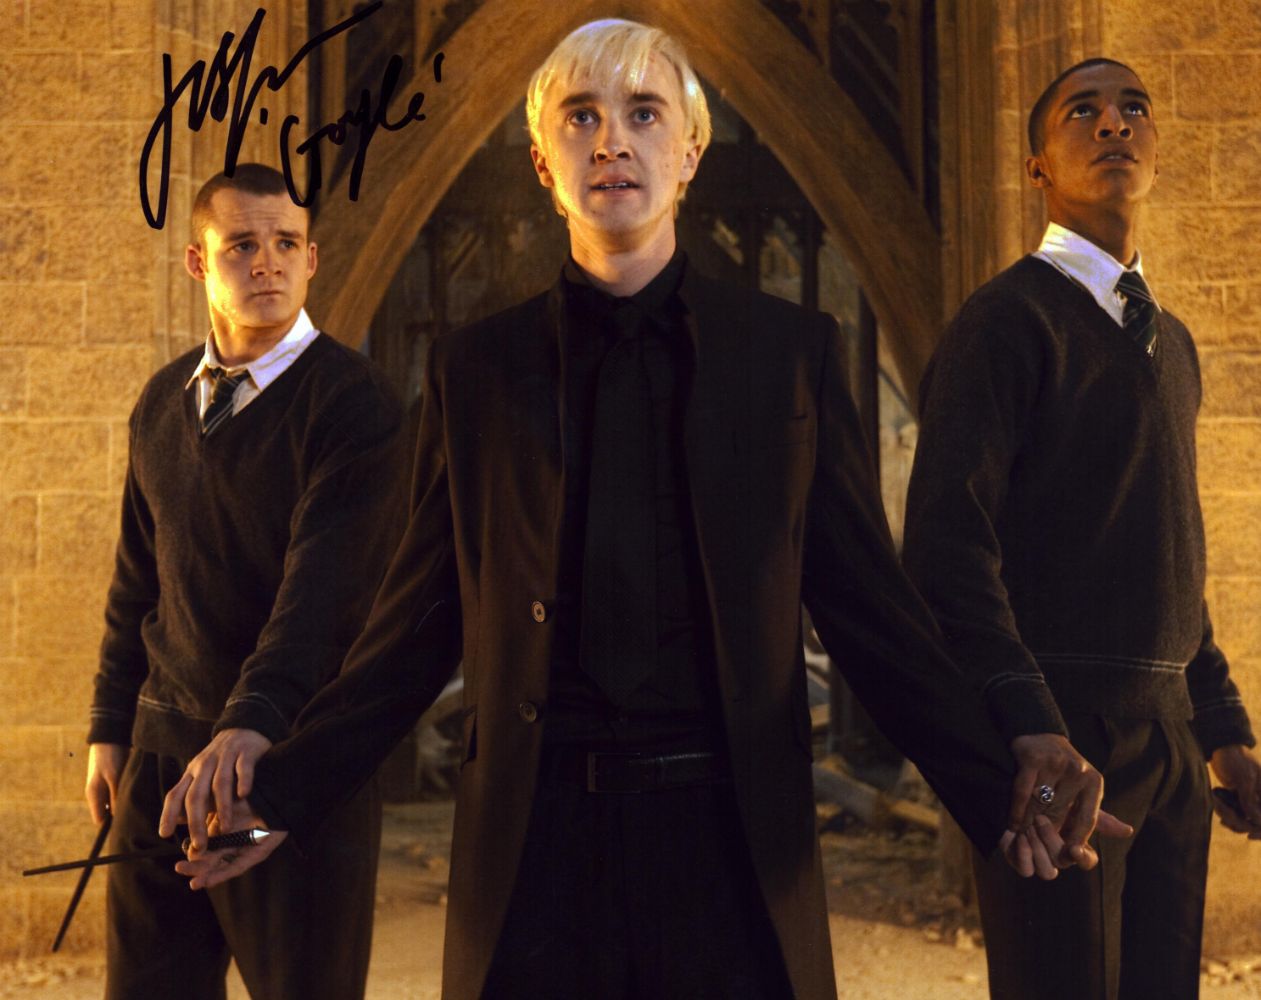 TIMED Autograph Auction Entertainment Music TV Film Dr Who Star Wars GOT Harry Potter